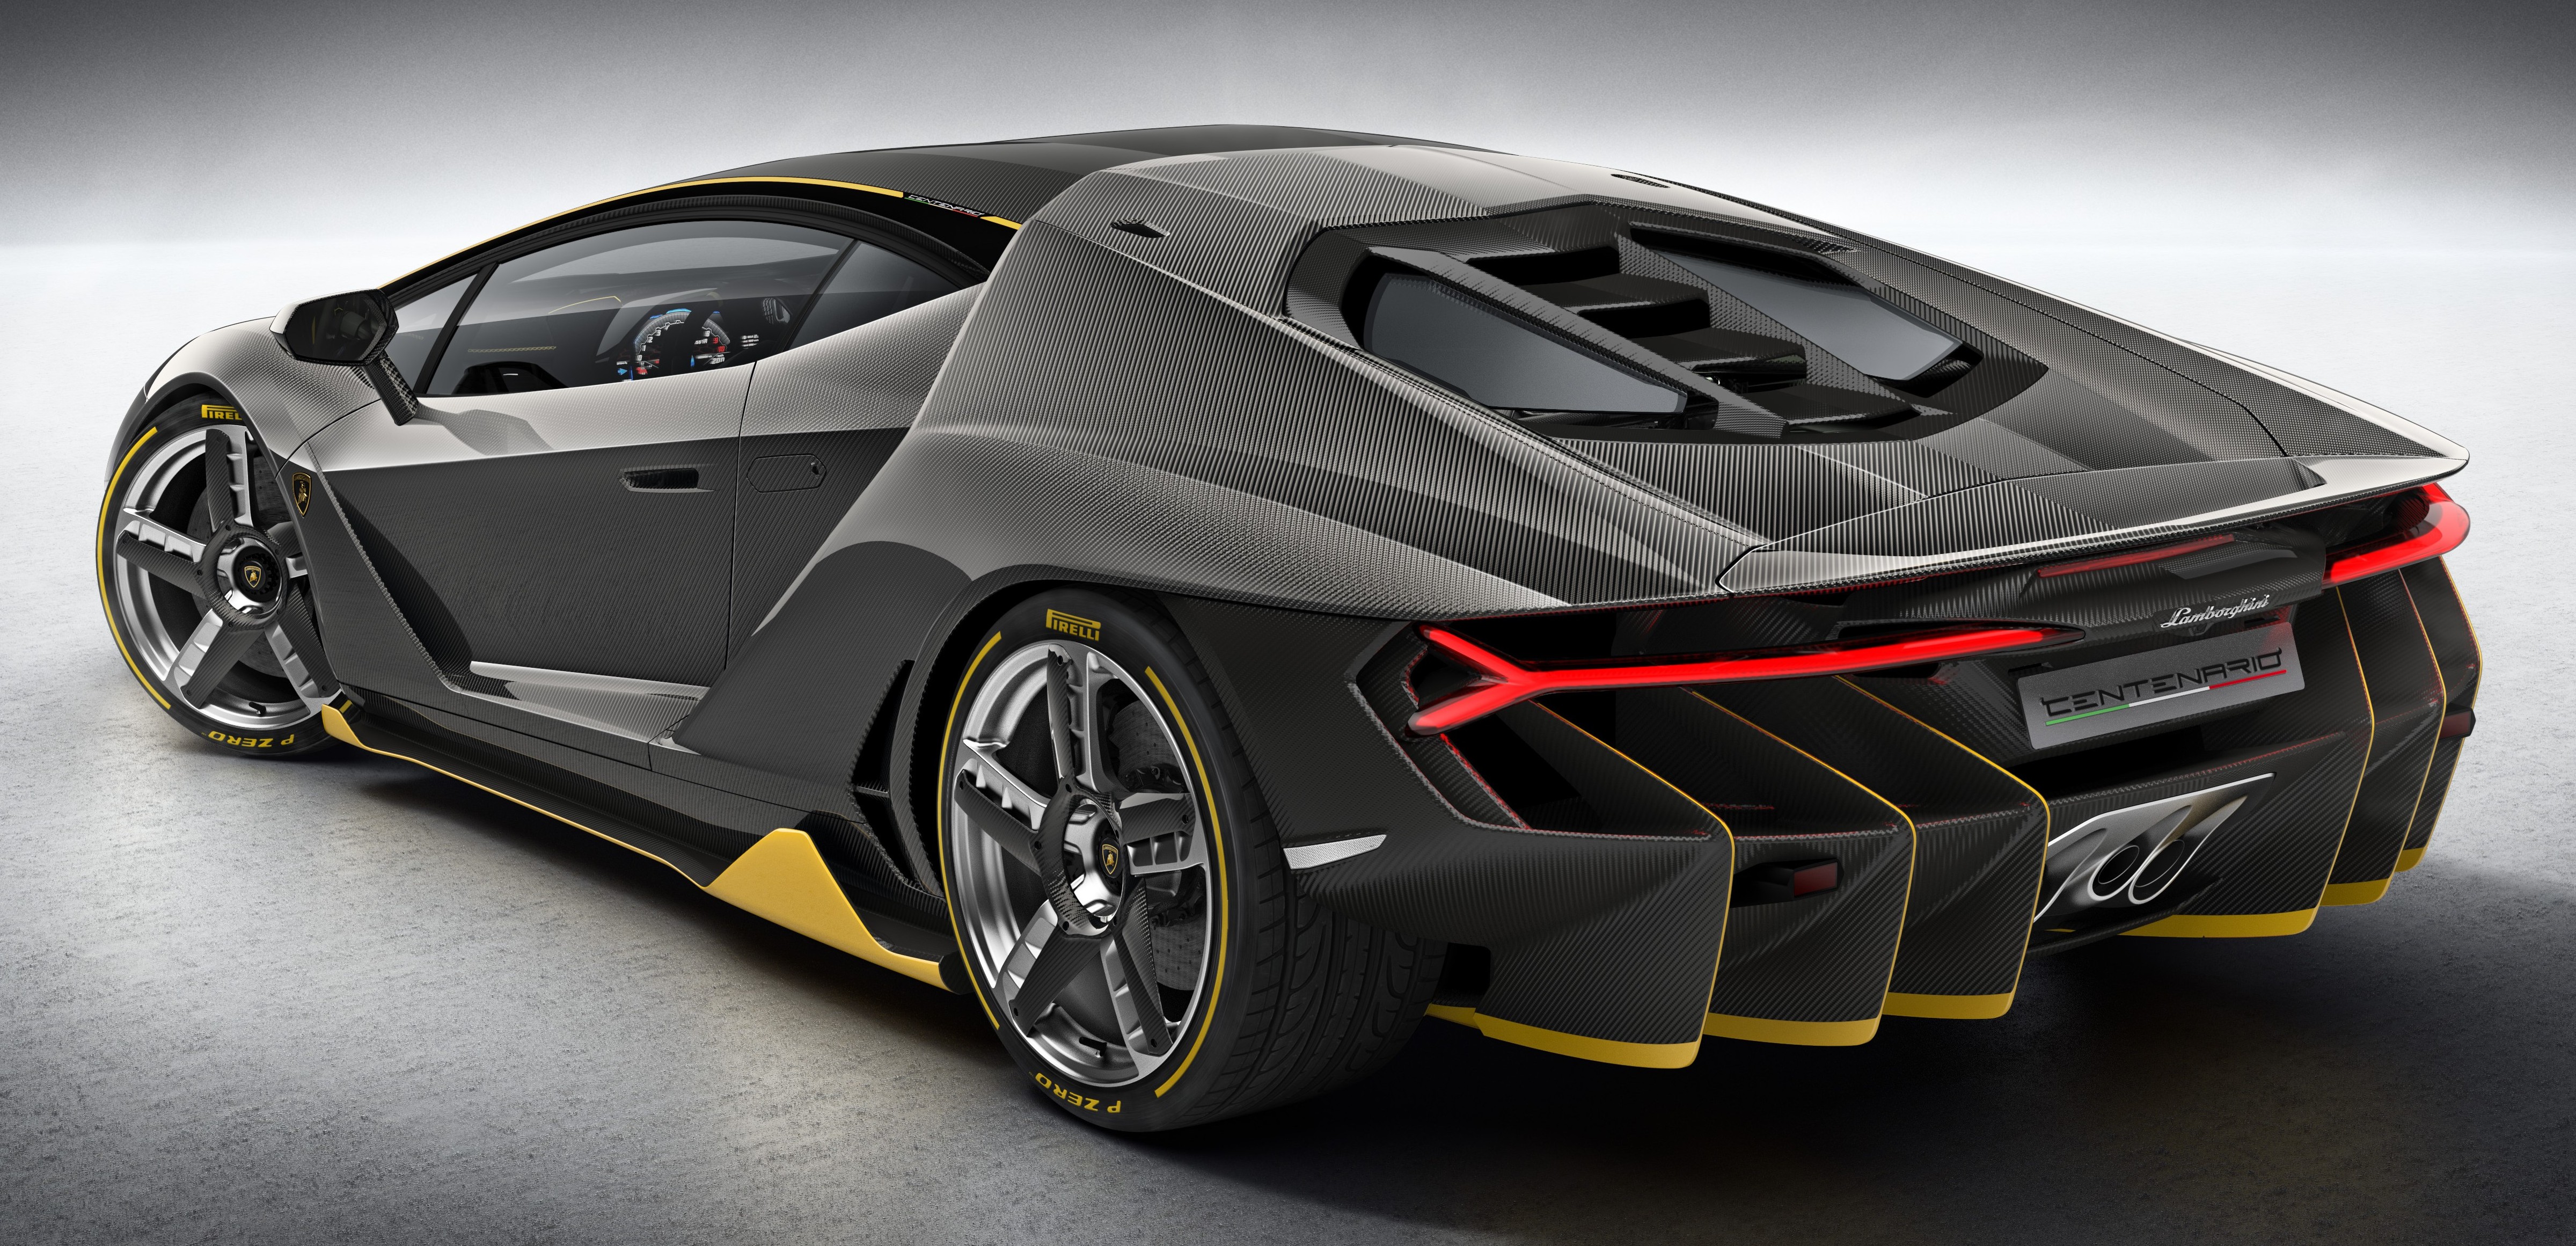 Lamborghini Centenario debuts - 770 hp, RM8 million